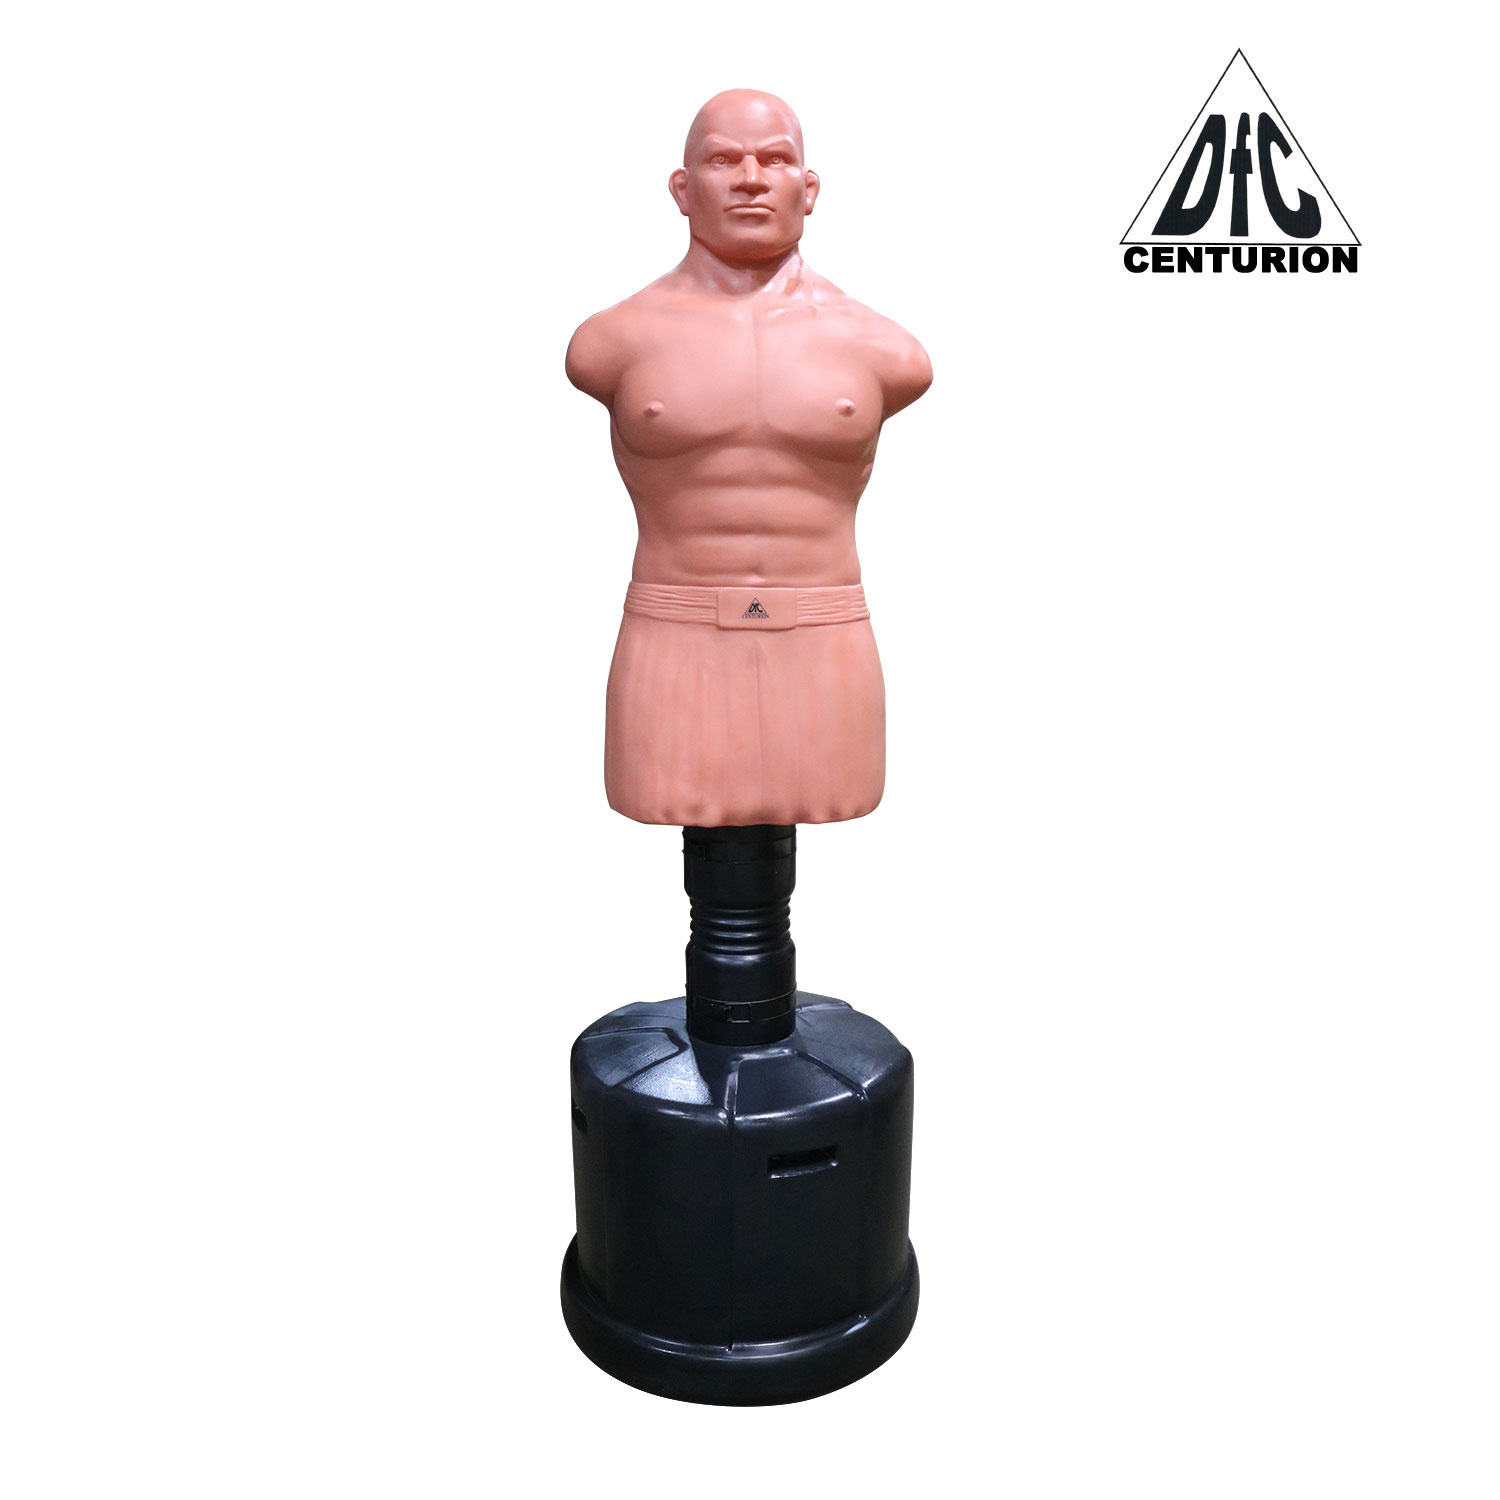 DFC Centurion Boxing Punching Man-Heavy водоналивной - бежевый из каталога манекенов для бокса в Перми по цене 43990 ₽